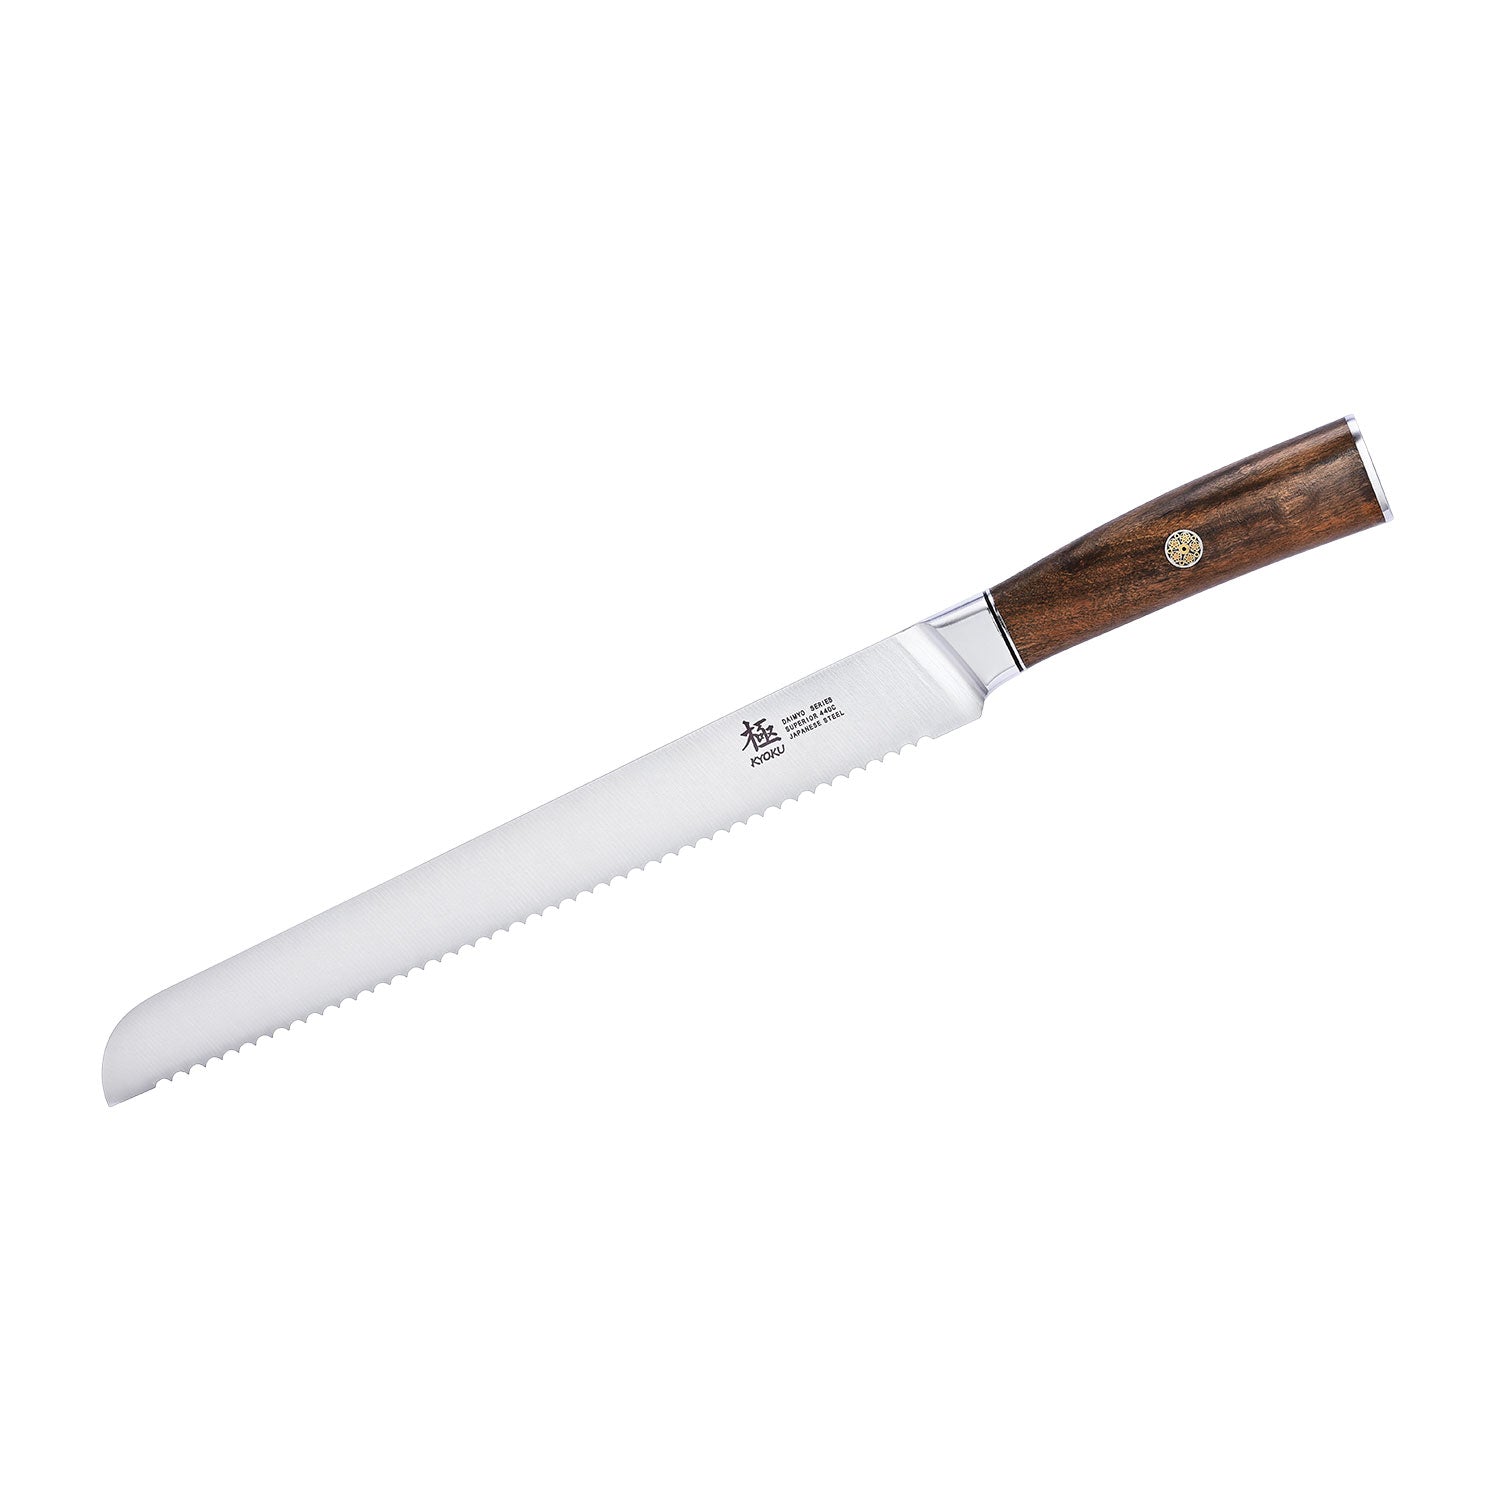 Japanese Bread Knives 440C Steel | Daimyo Series | Kyoku Knives